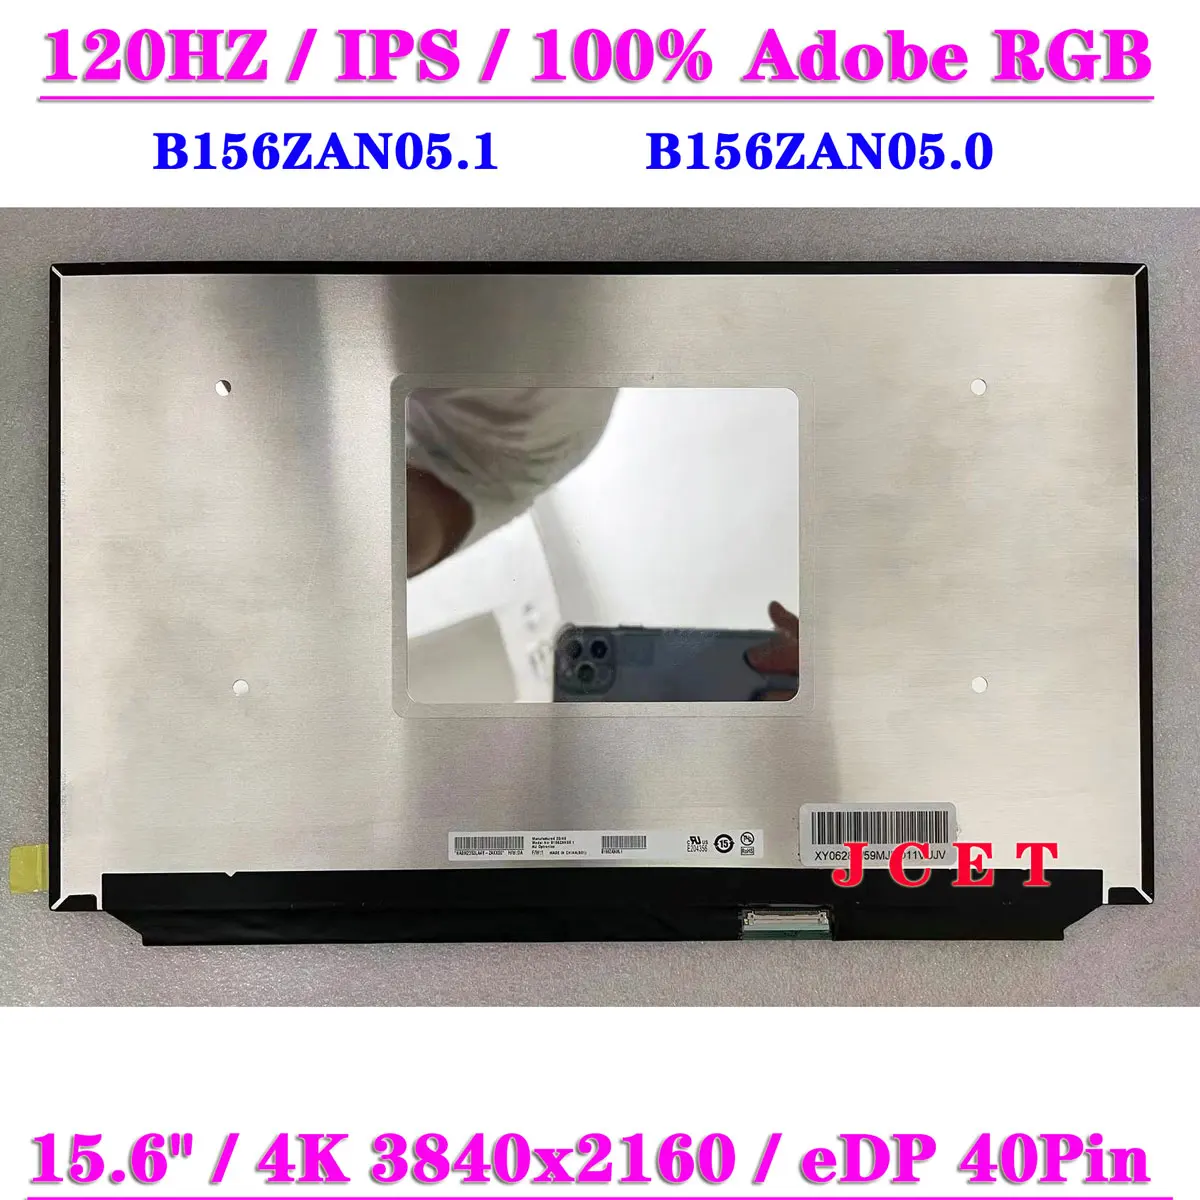 

New 15.6" 4k 120HZ LCD Display Panel B156ZAN05.1 Fit B156ZAN05.0 EDP 40Pins 100% Adobe RGB 3840x2160 UHD Gaming Laptop Screen